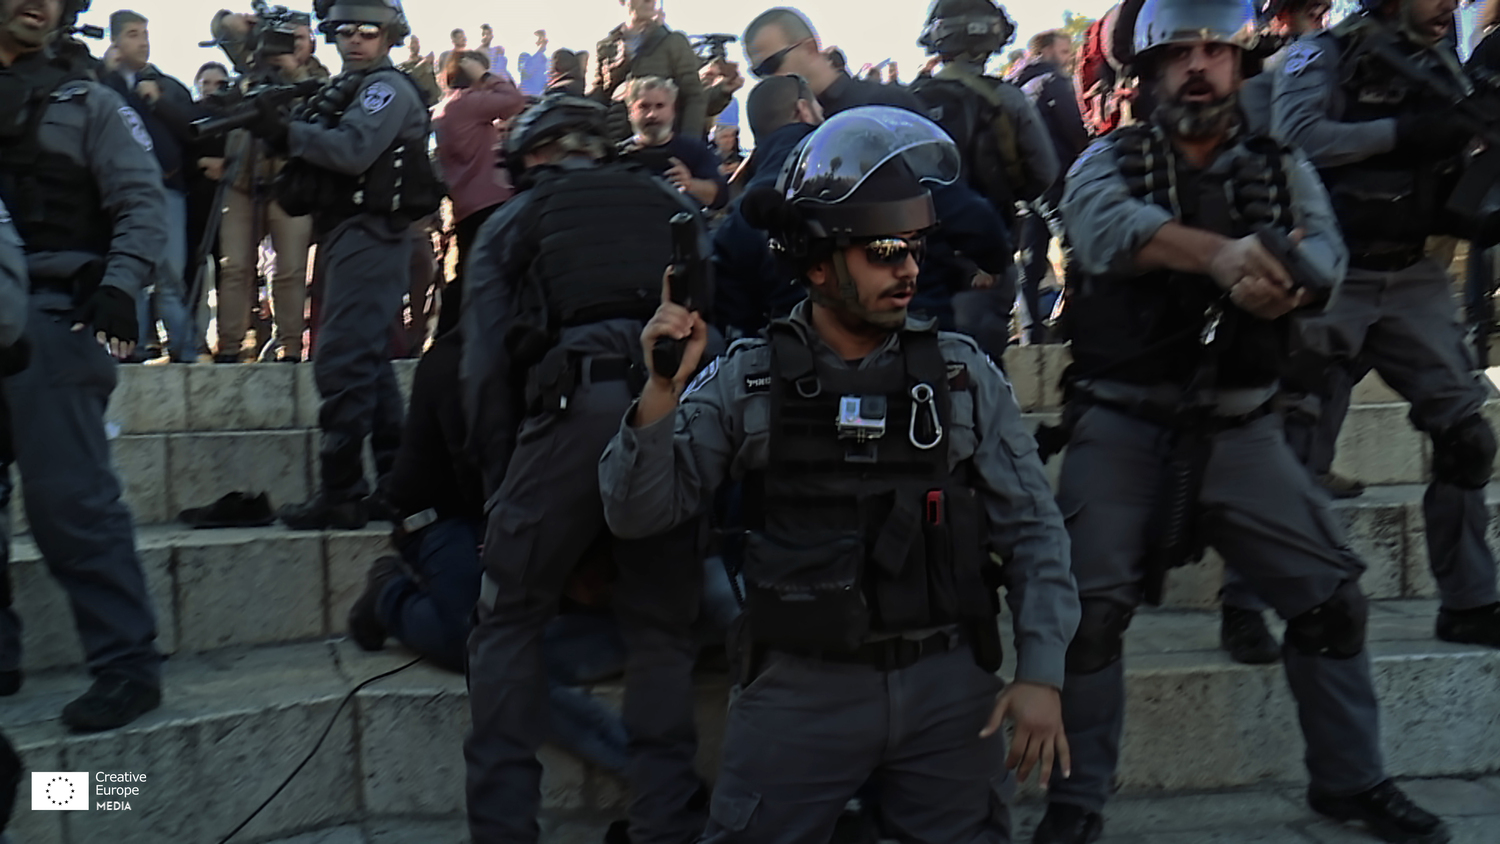 Israeli police in a scene from Tonje Hessen Schei’s documentary 